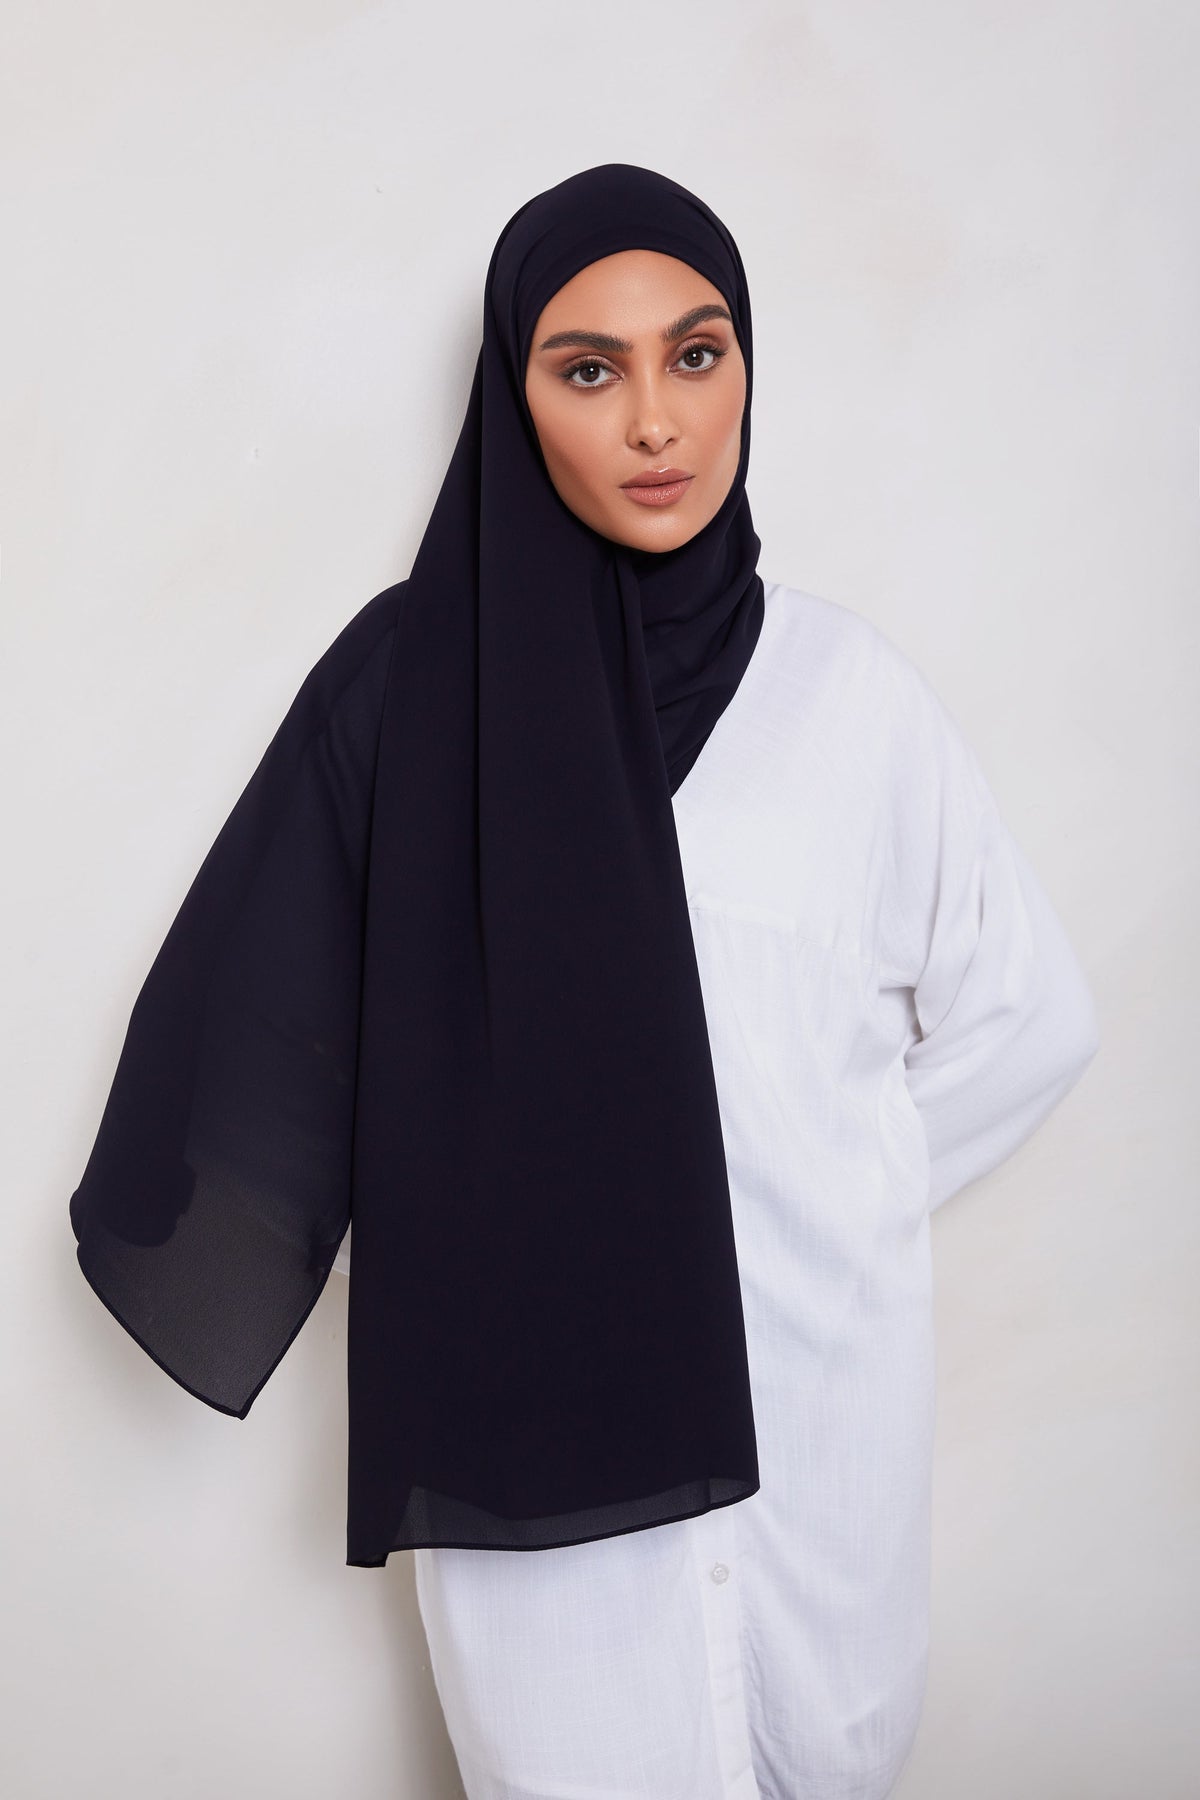 TEXTURE Everyday Chiffon Hijab - Better in Black epschoolboard 